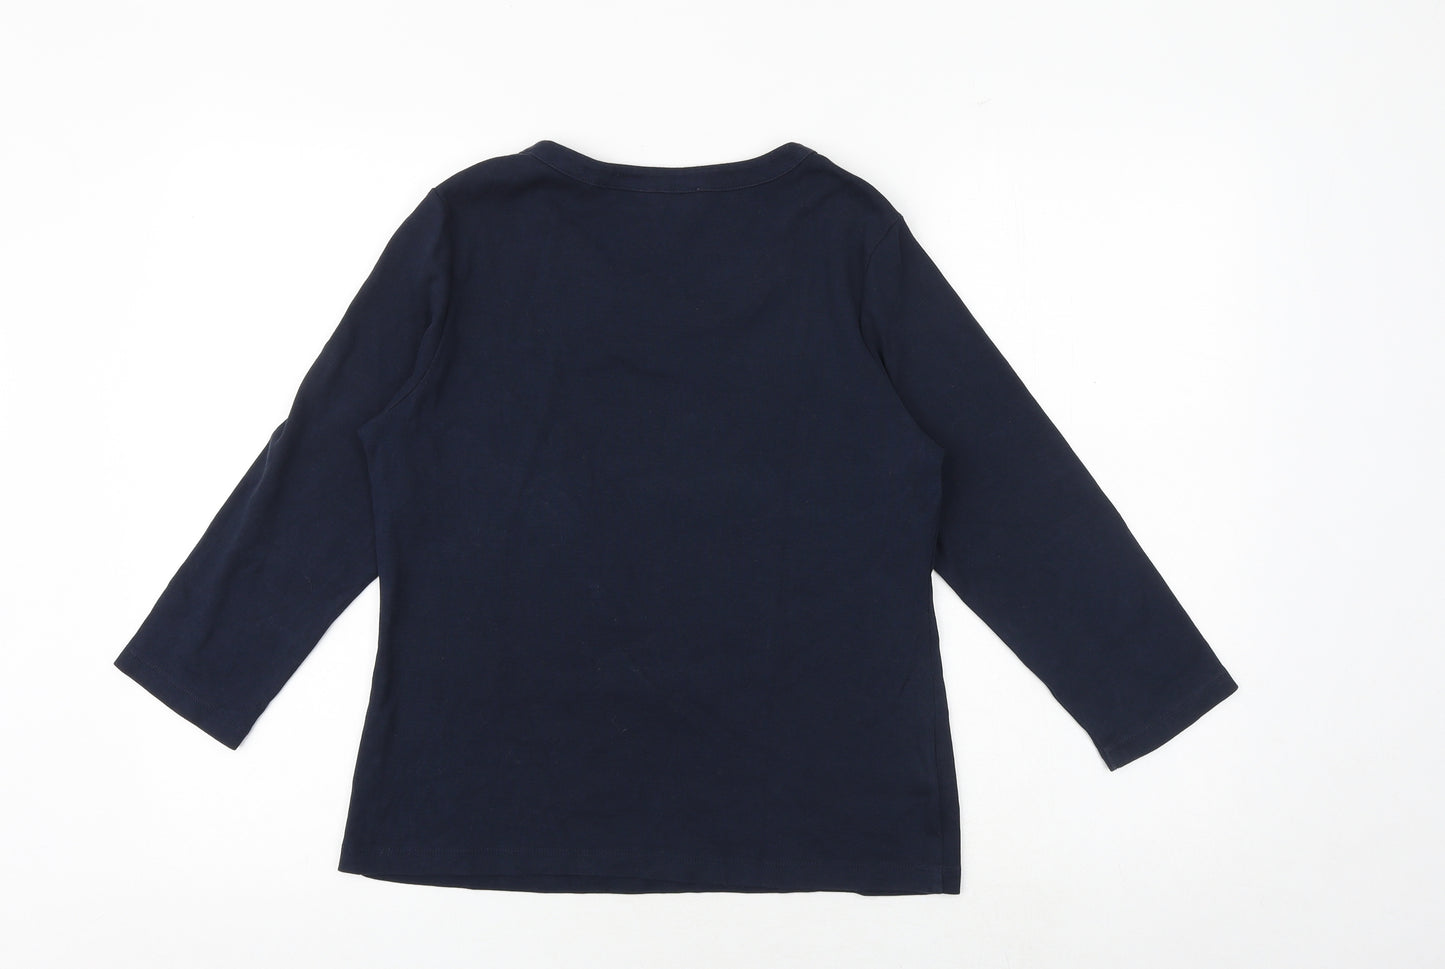 CC Womens Blue 100% Cotton Basic T-Shirt Size M Boat Neck